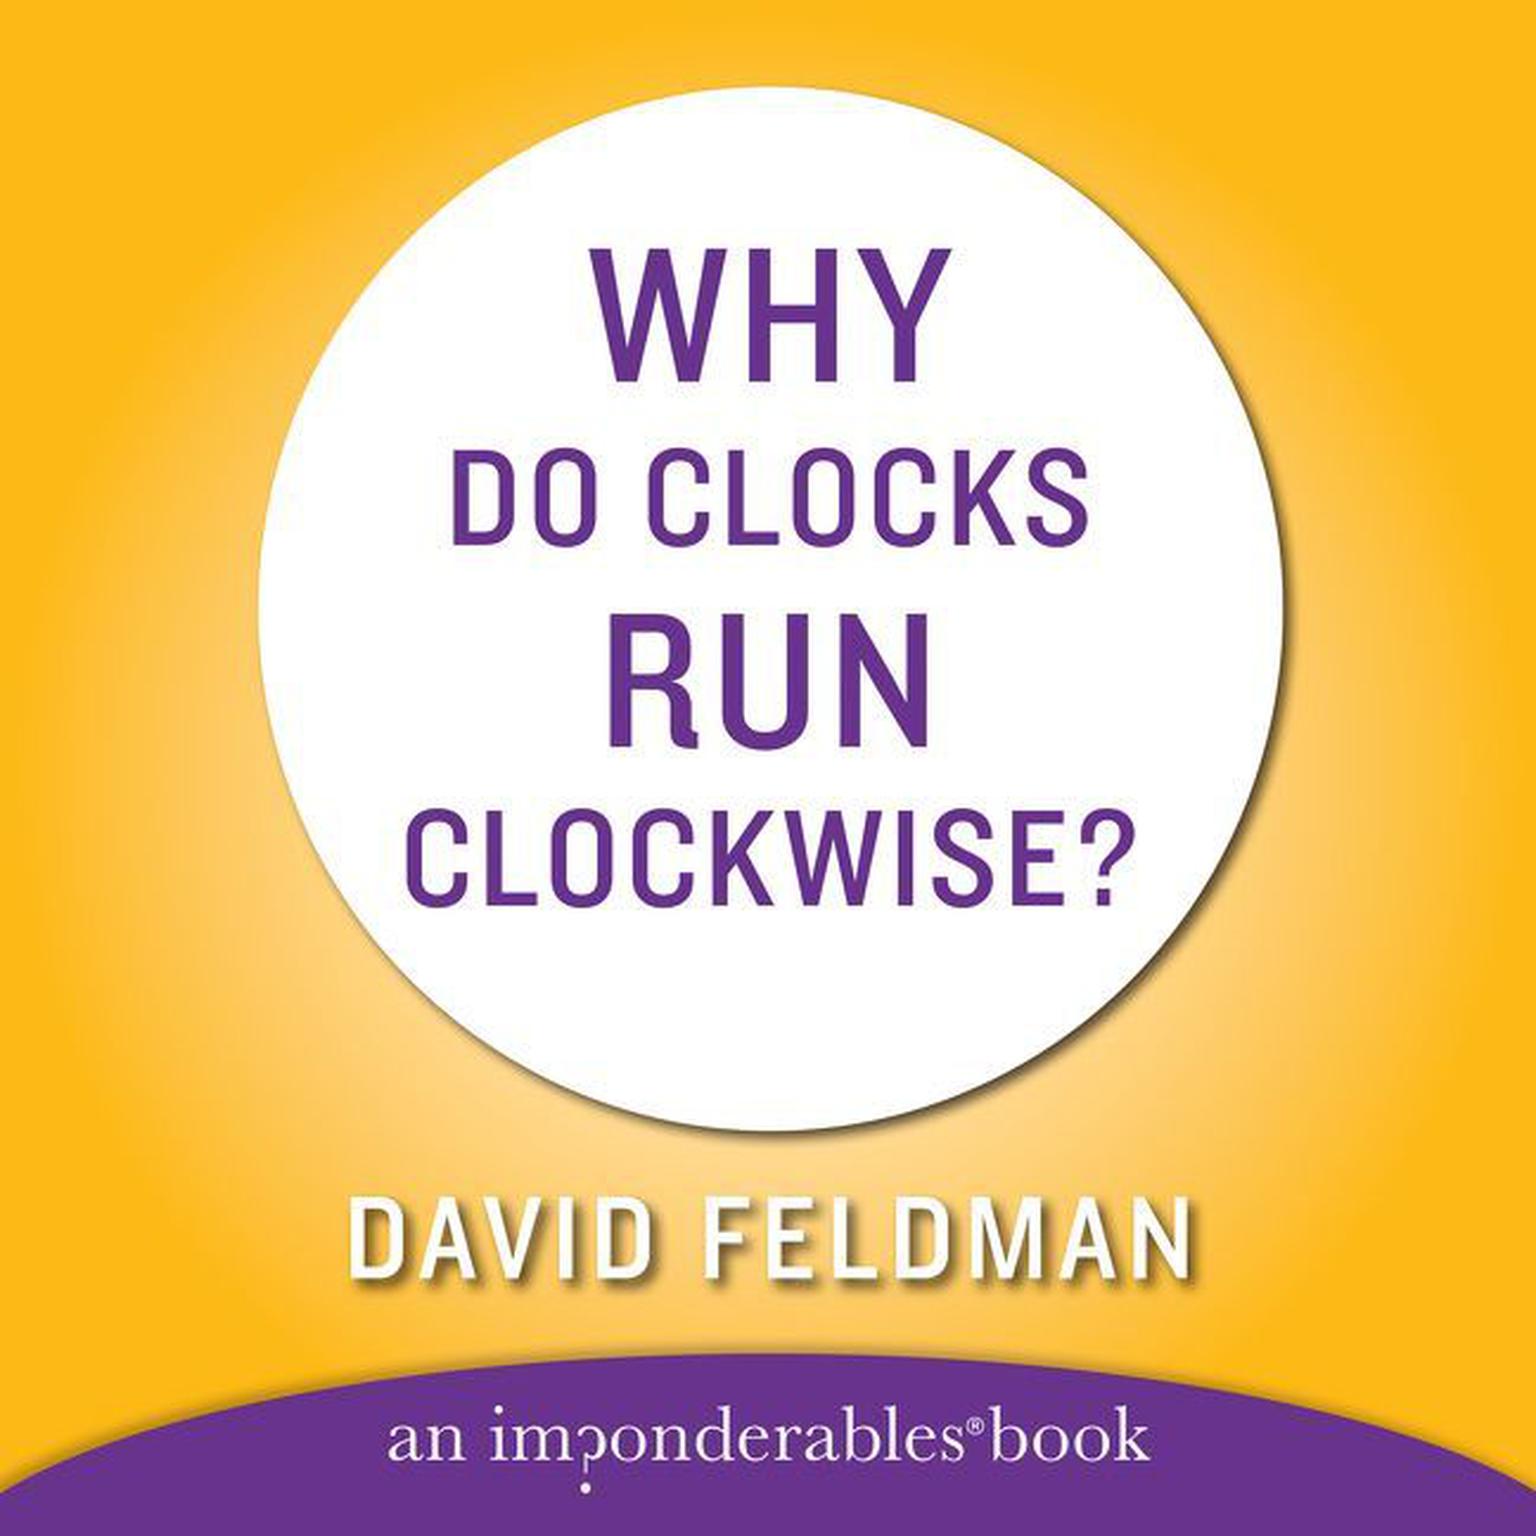 WHY DO CLOCKS RUN CLOCKWISE (Abridged): An Imponderables Book Audiobook, by David Feldman